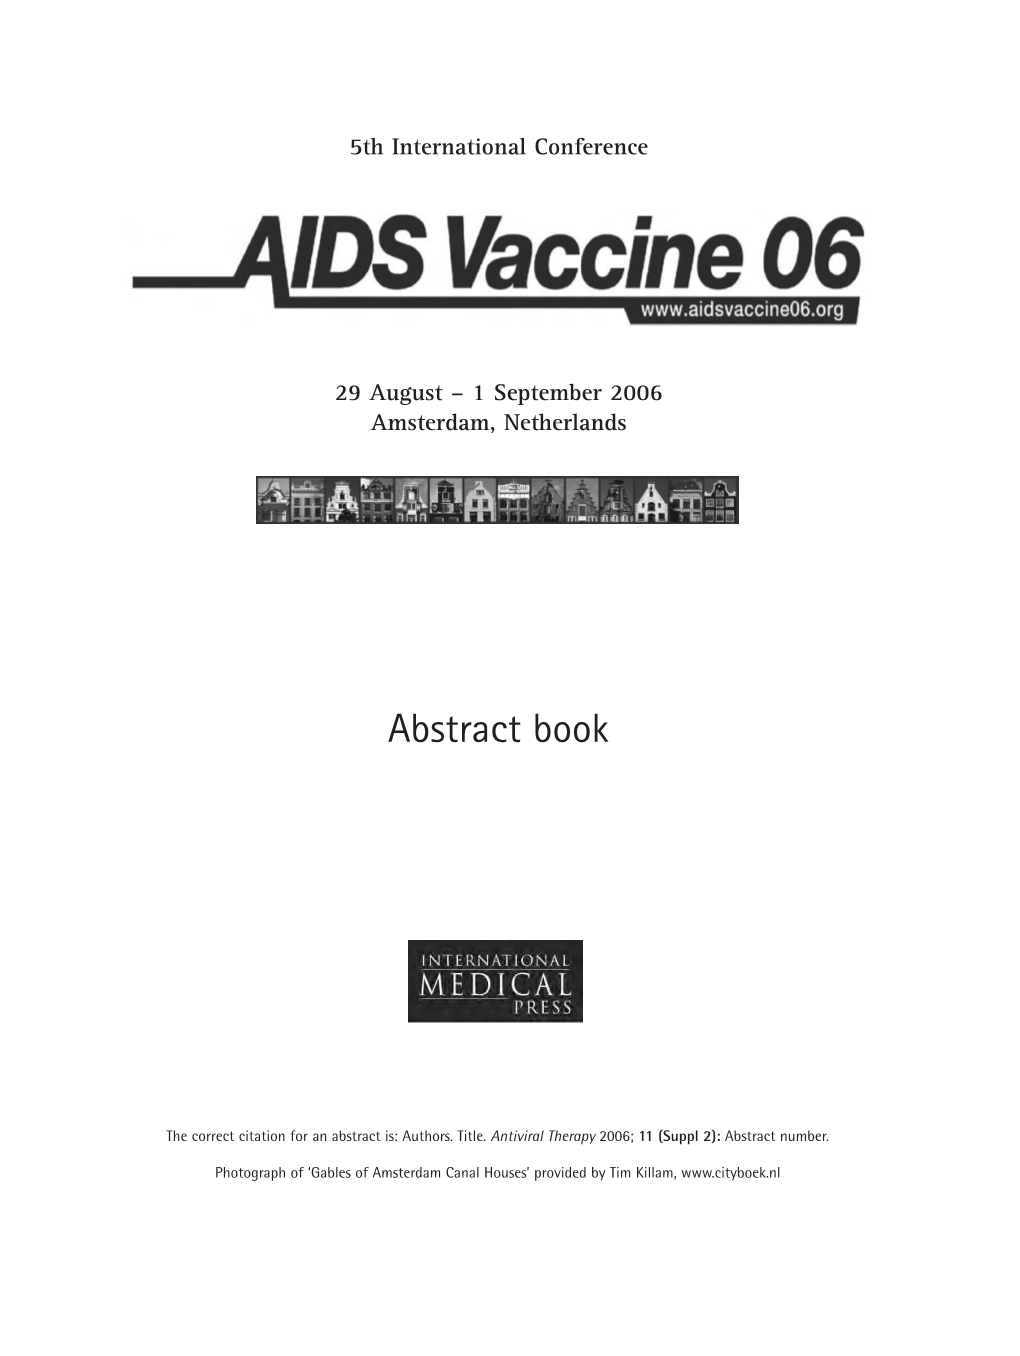 AIDS 2006 Prelim Matter 15/8/06 15:44 Page I